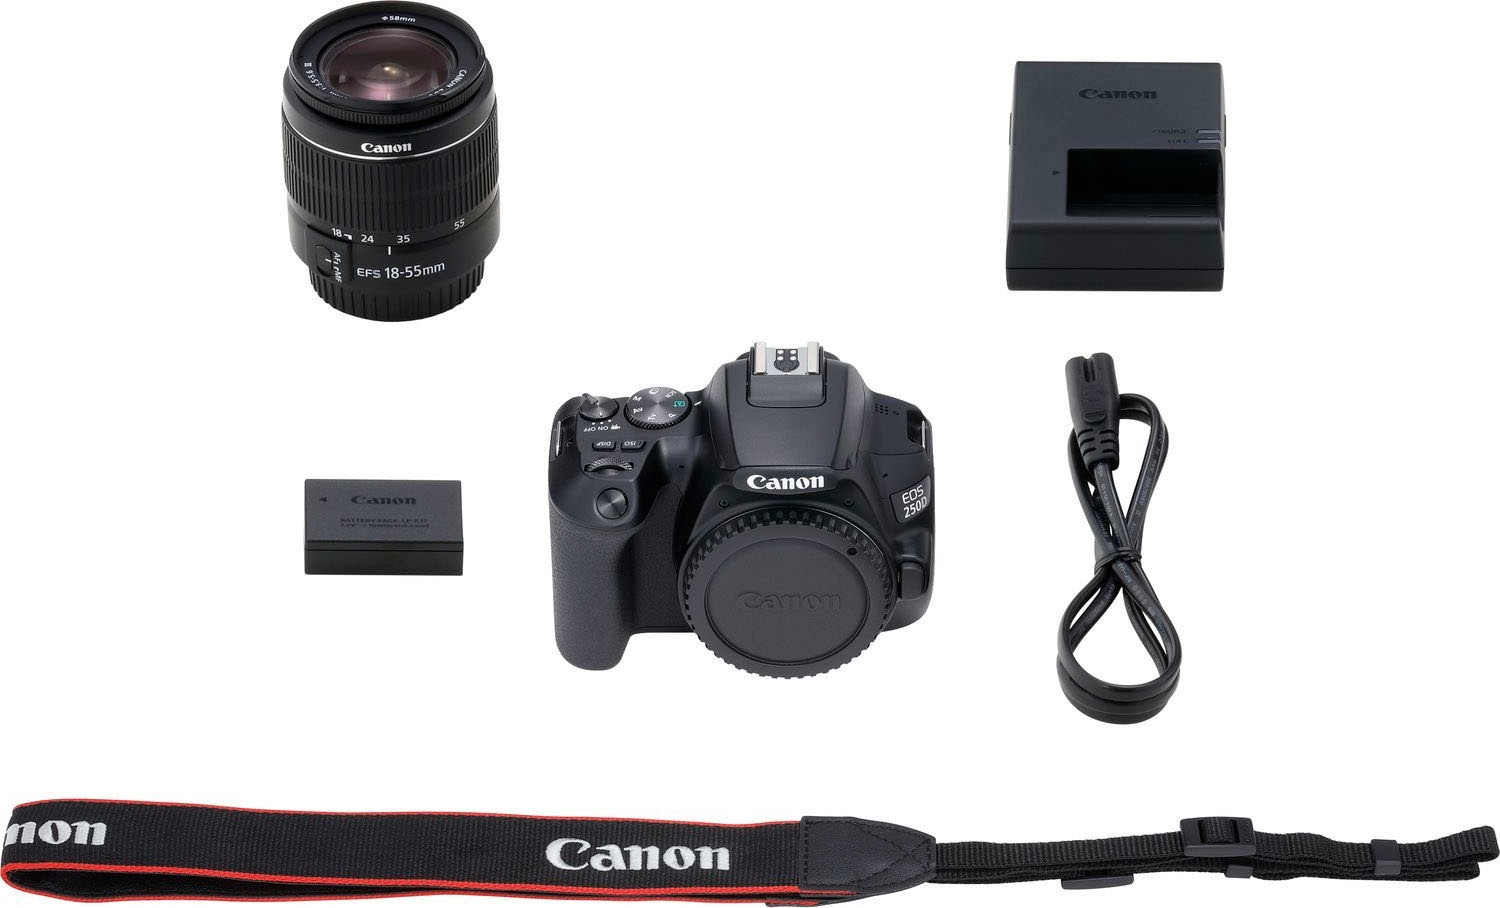 EF-S Canon + MP, Shop OTTO 24,1 III im SB130 f/3.5-5.6 Bluetooth-WLAN Online 18-55mm III, f/3.5-5.6 EF-S 18-55mm Kit«, + Systemkamera »250D